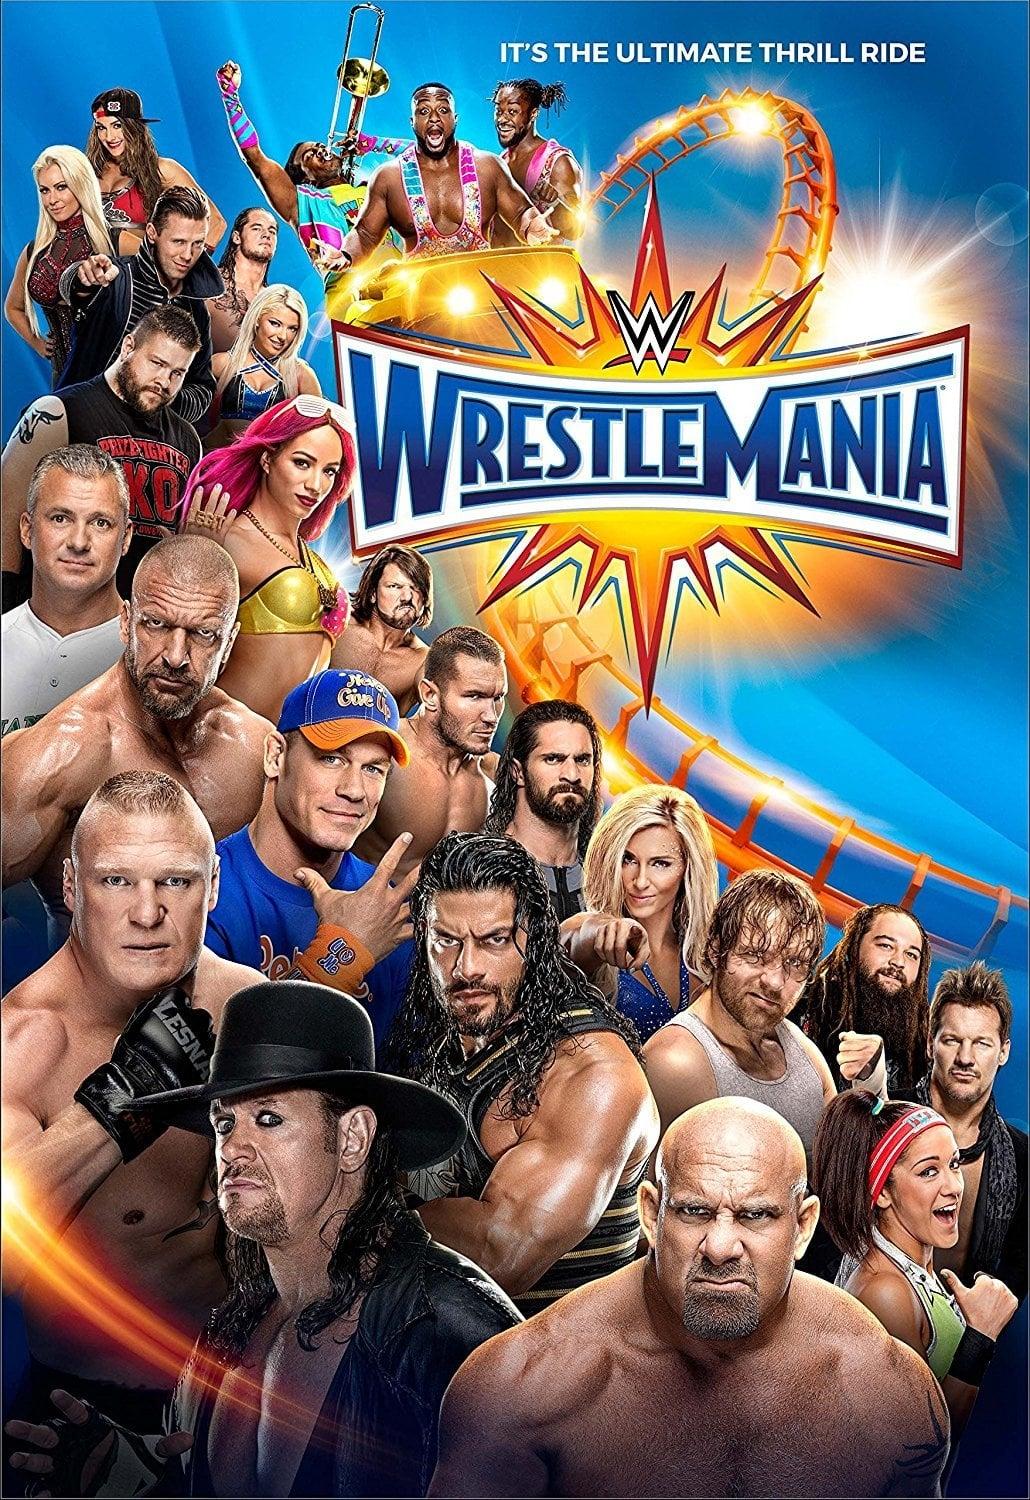 WWE WrestleMania 33 poster